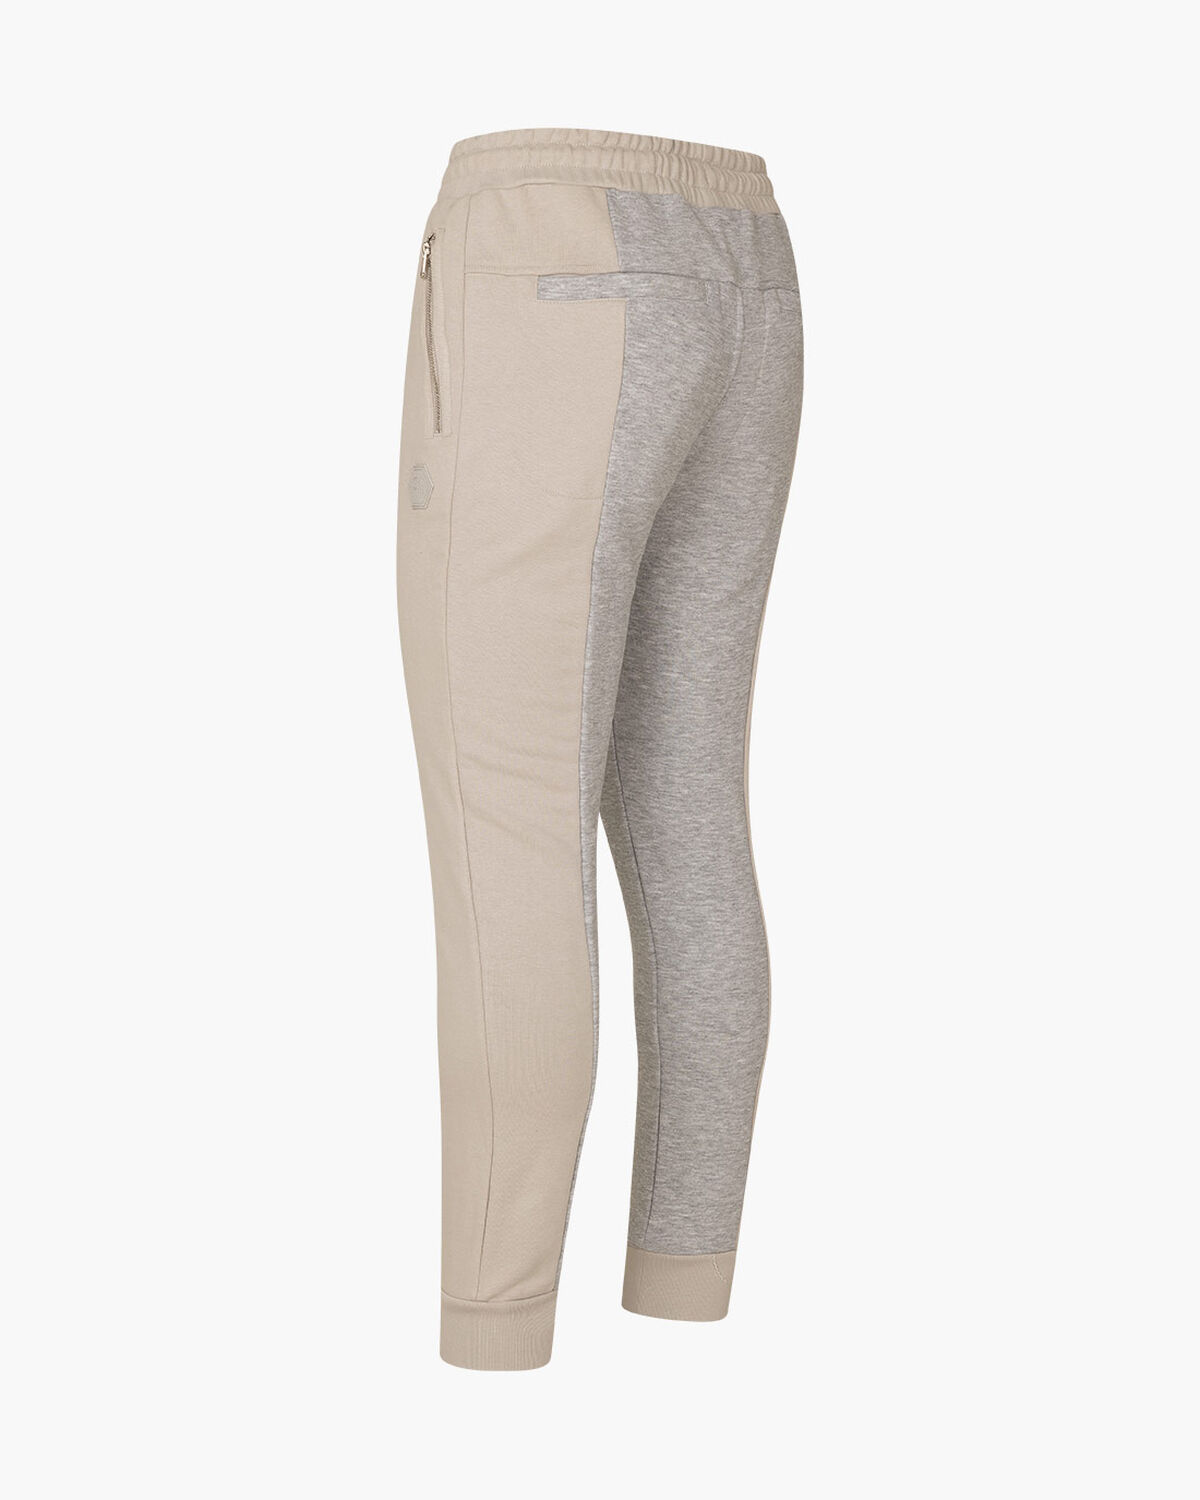 Galanzo FZ Track Pant - 65% Polyester / 35% Cotton, Light Grey, hi-res